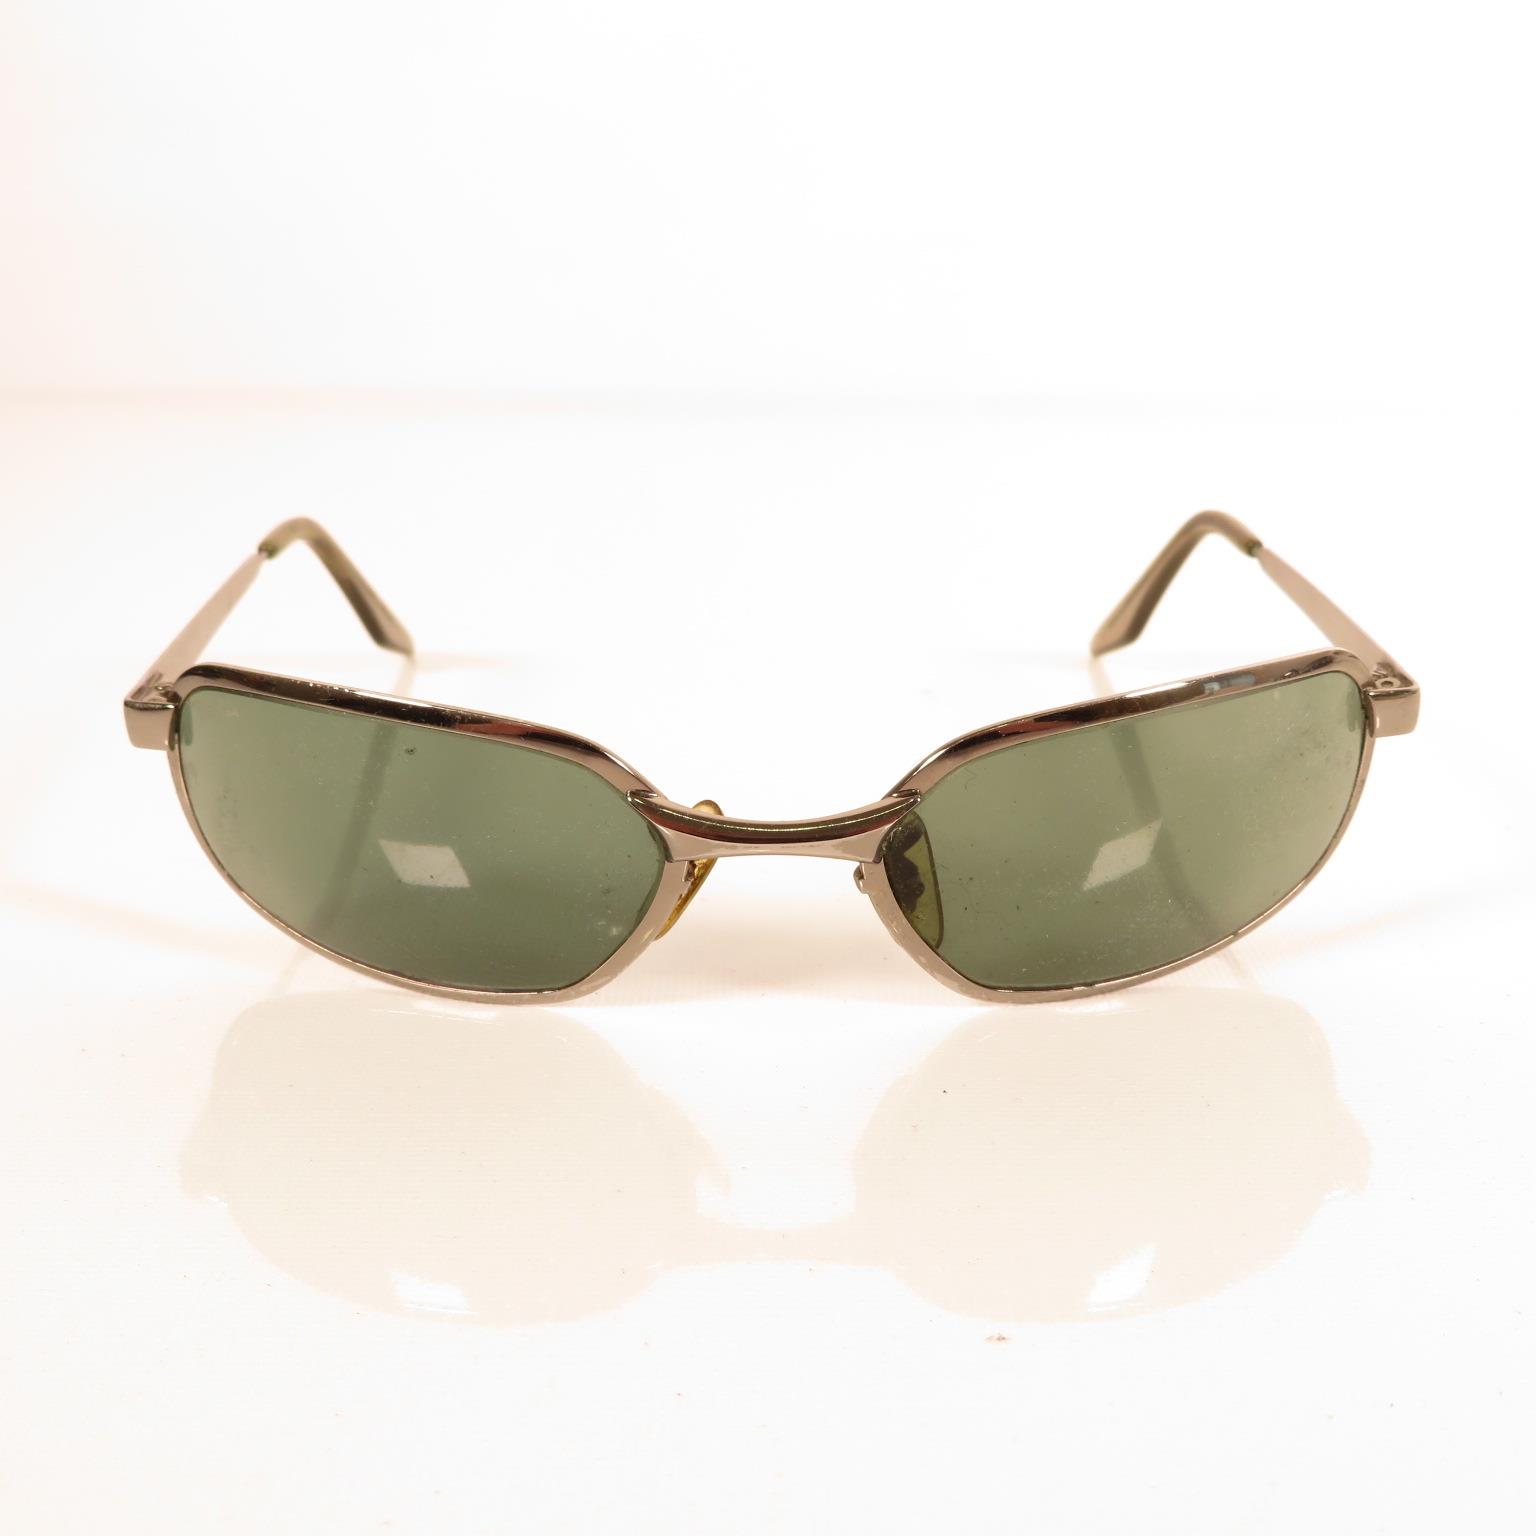 5x sets of Ray Ban sunglasses - - Image 11 of 23